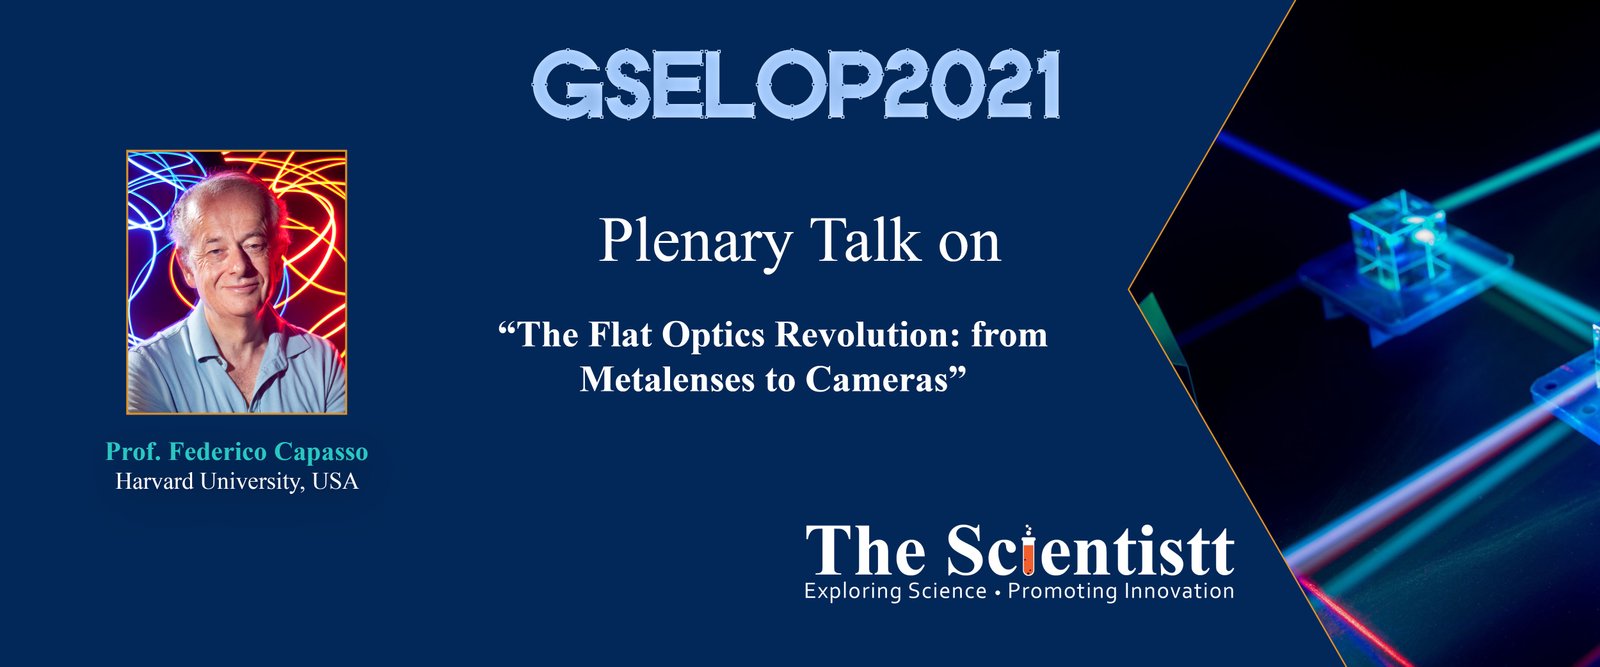 Seks krig Refinement Laser, Optics and Photonics Conference | GSELOP2021 | Paris, France |  August| Conferences in 2021